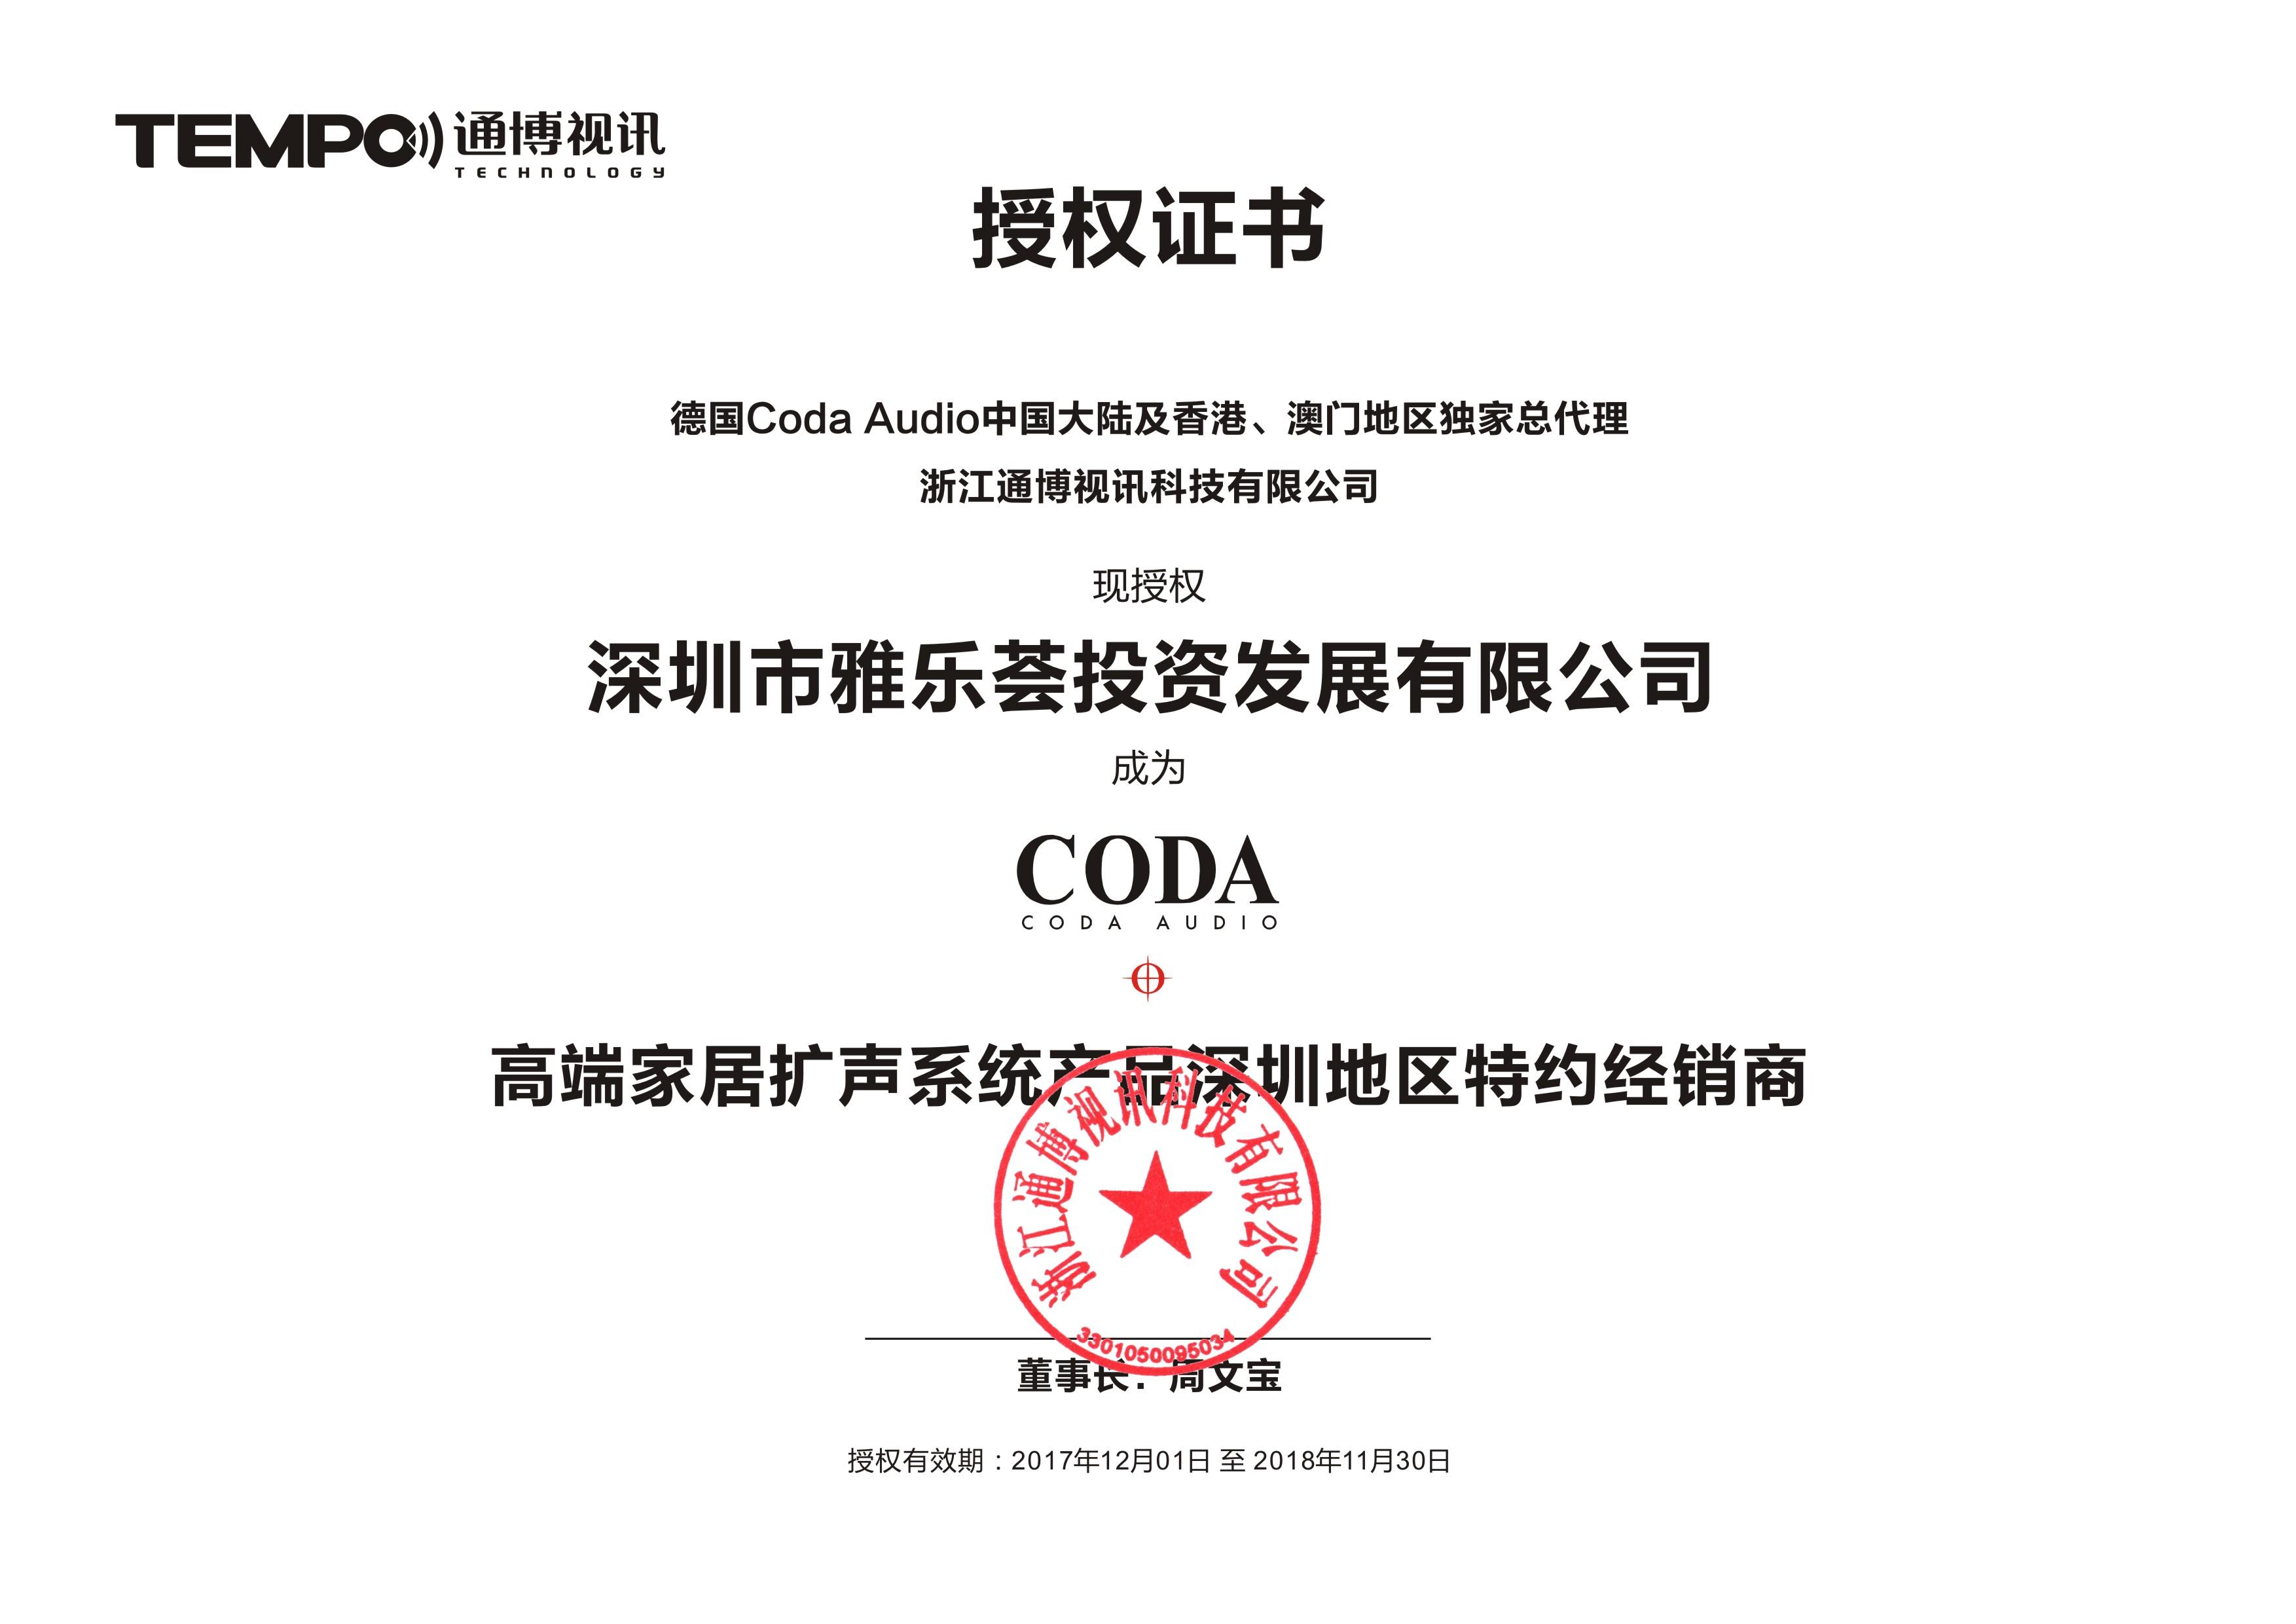 CODA高端家居扩声系统产品东莞地区特约经销商